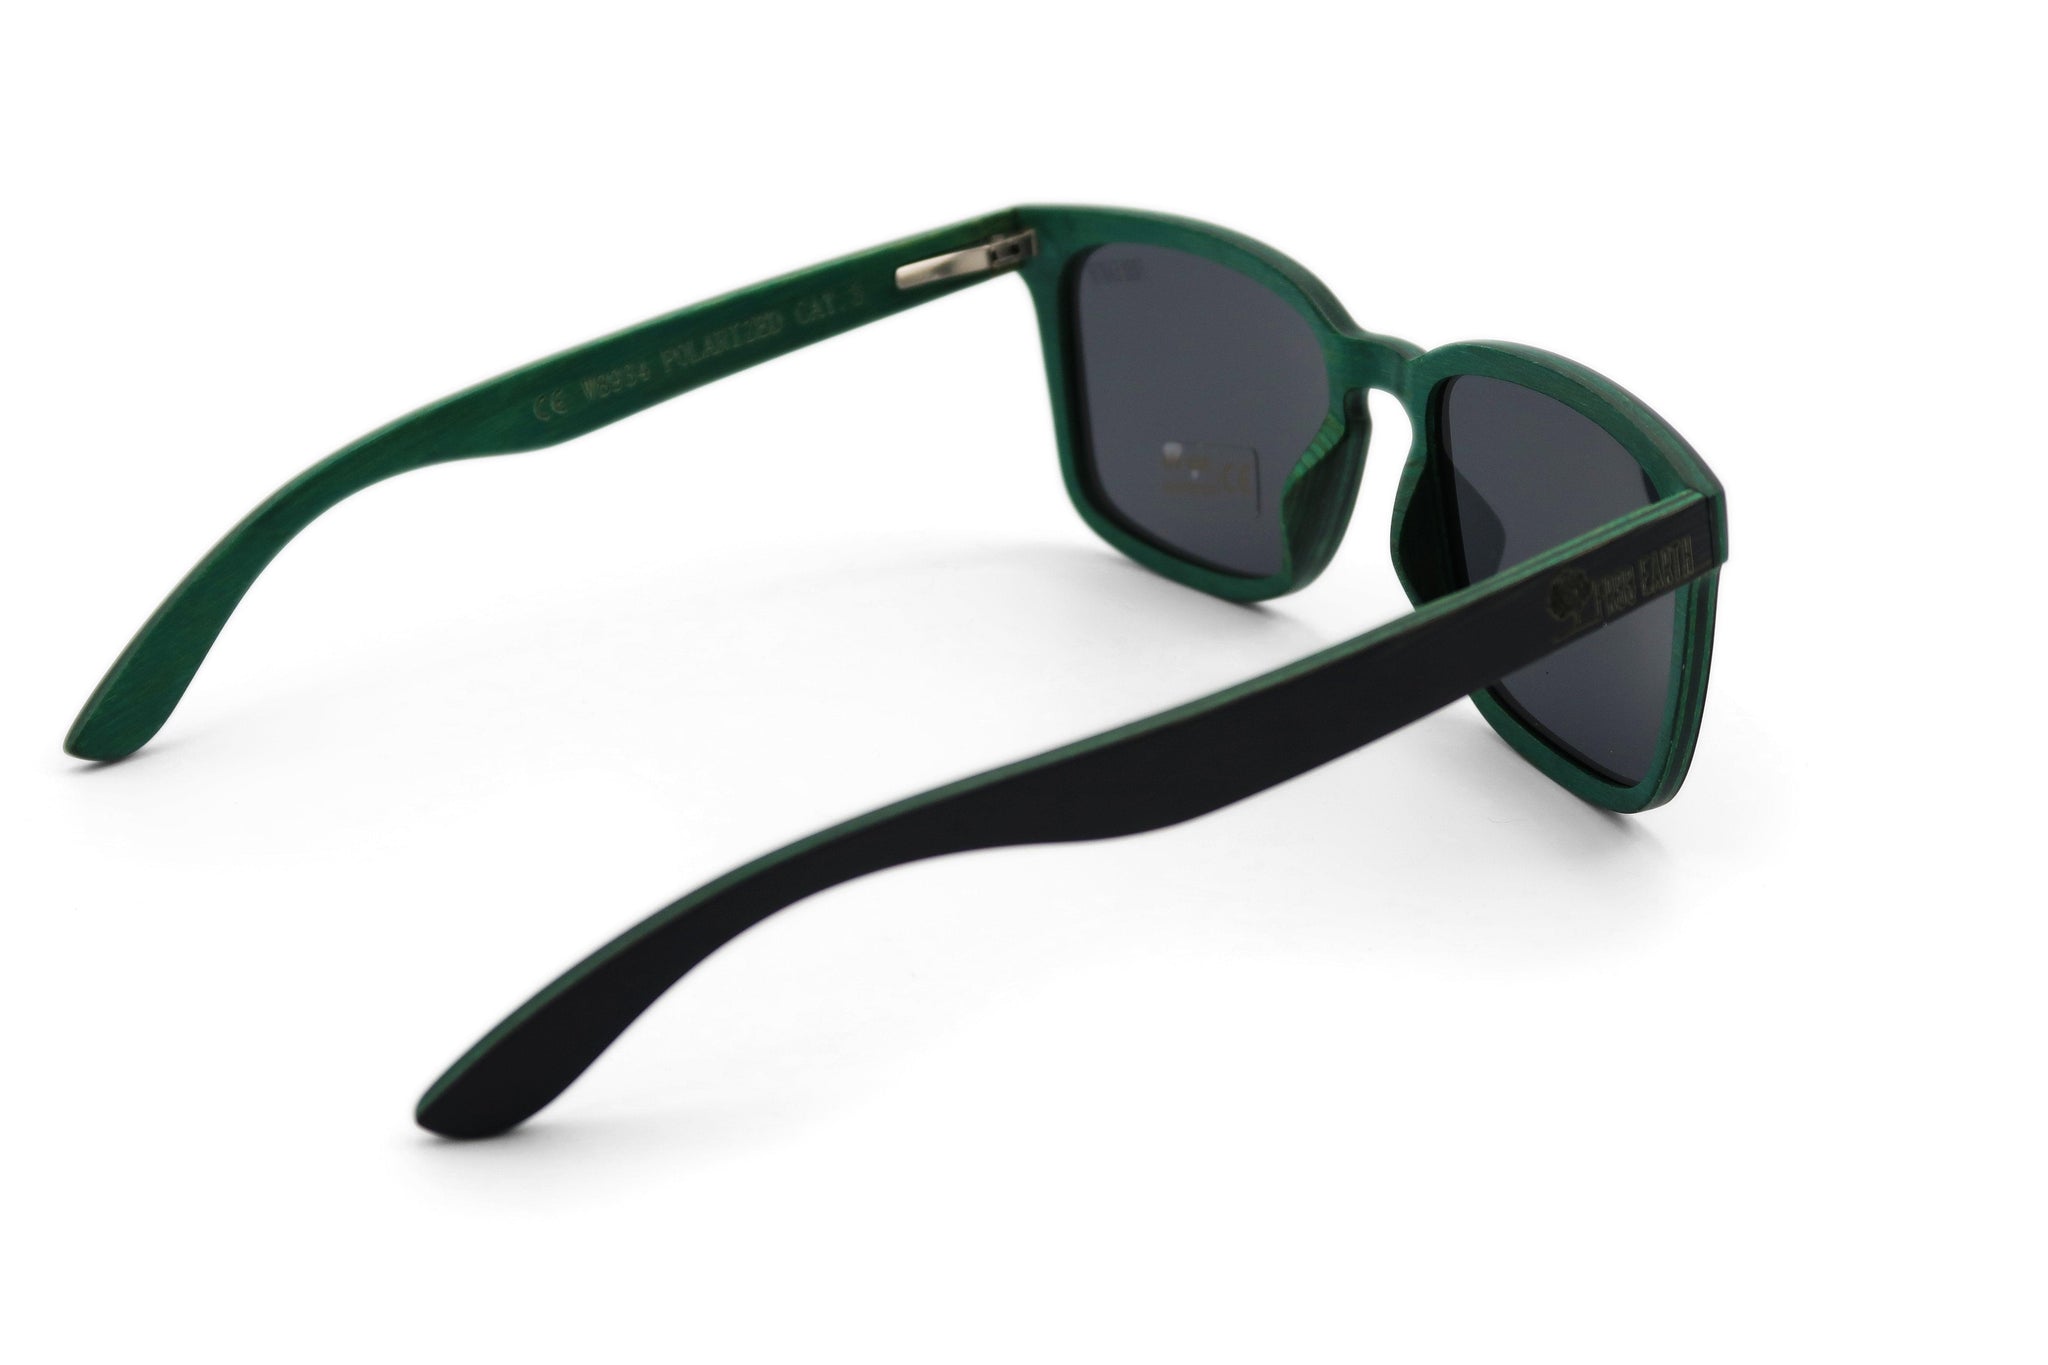 Skate Sunglasses Turtle Green Deals499